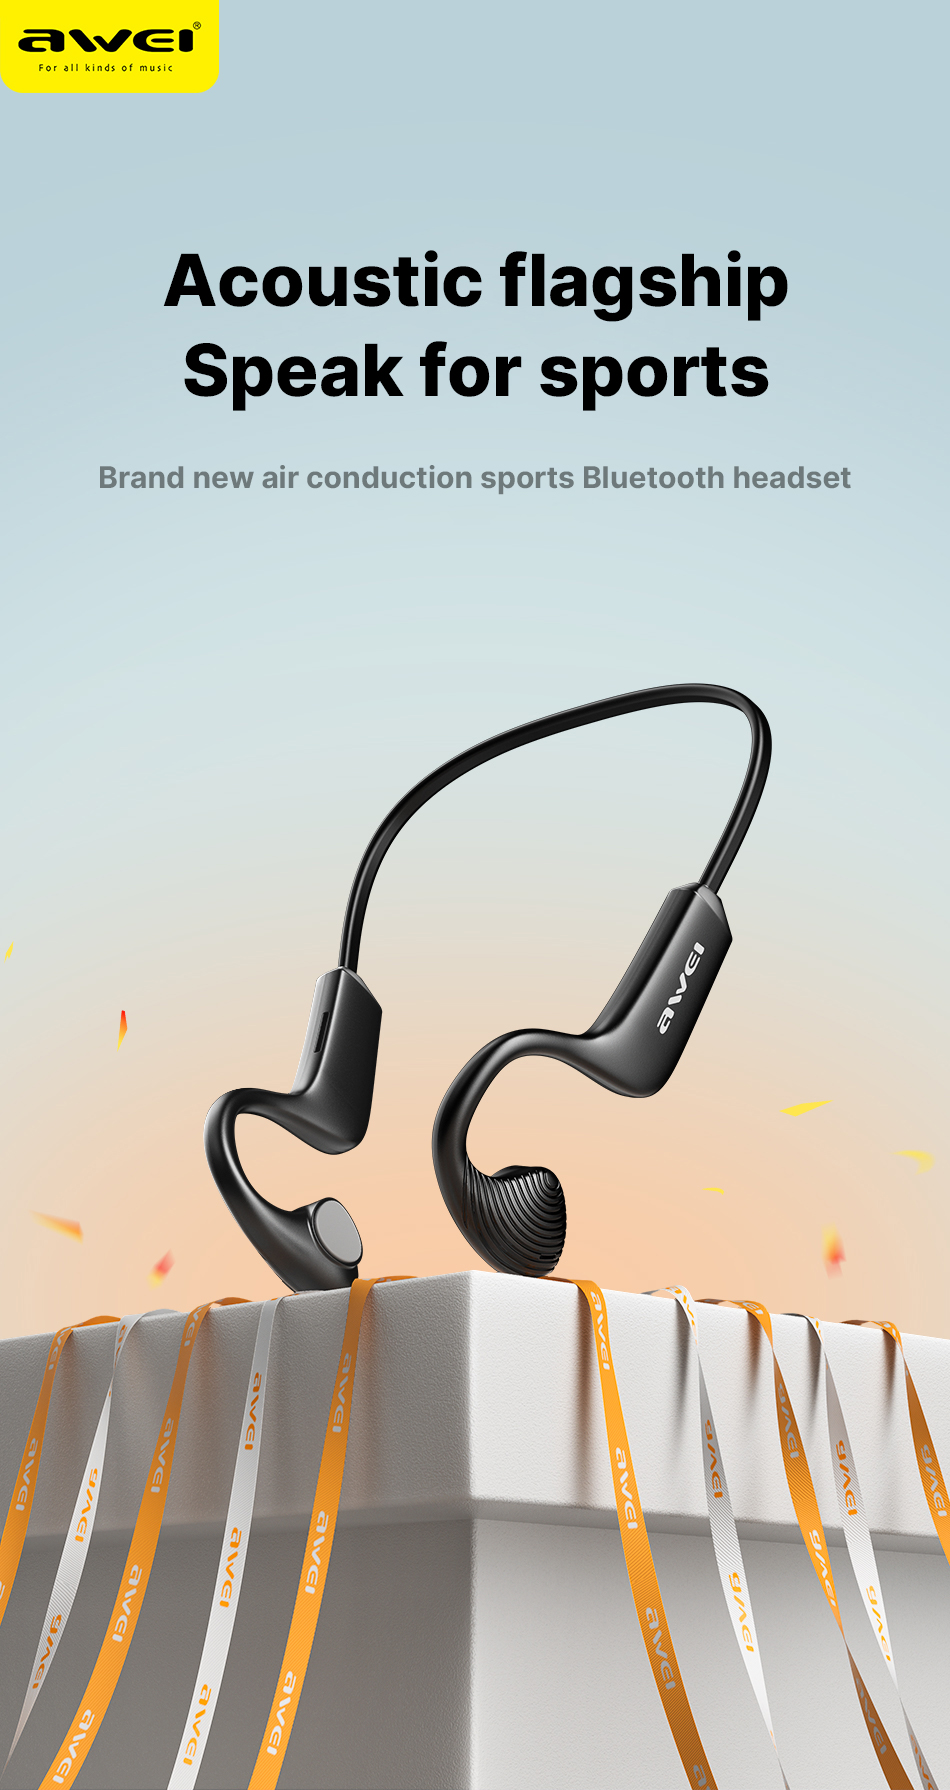 Awei A896BL Air Conduction Earphone bluetooth V5.3 Earphone HiFi HD Sound Neckband Sports Headphones with Mic